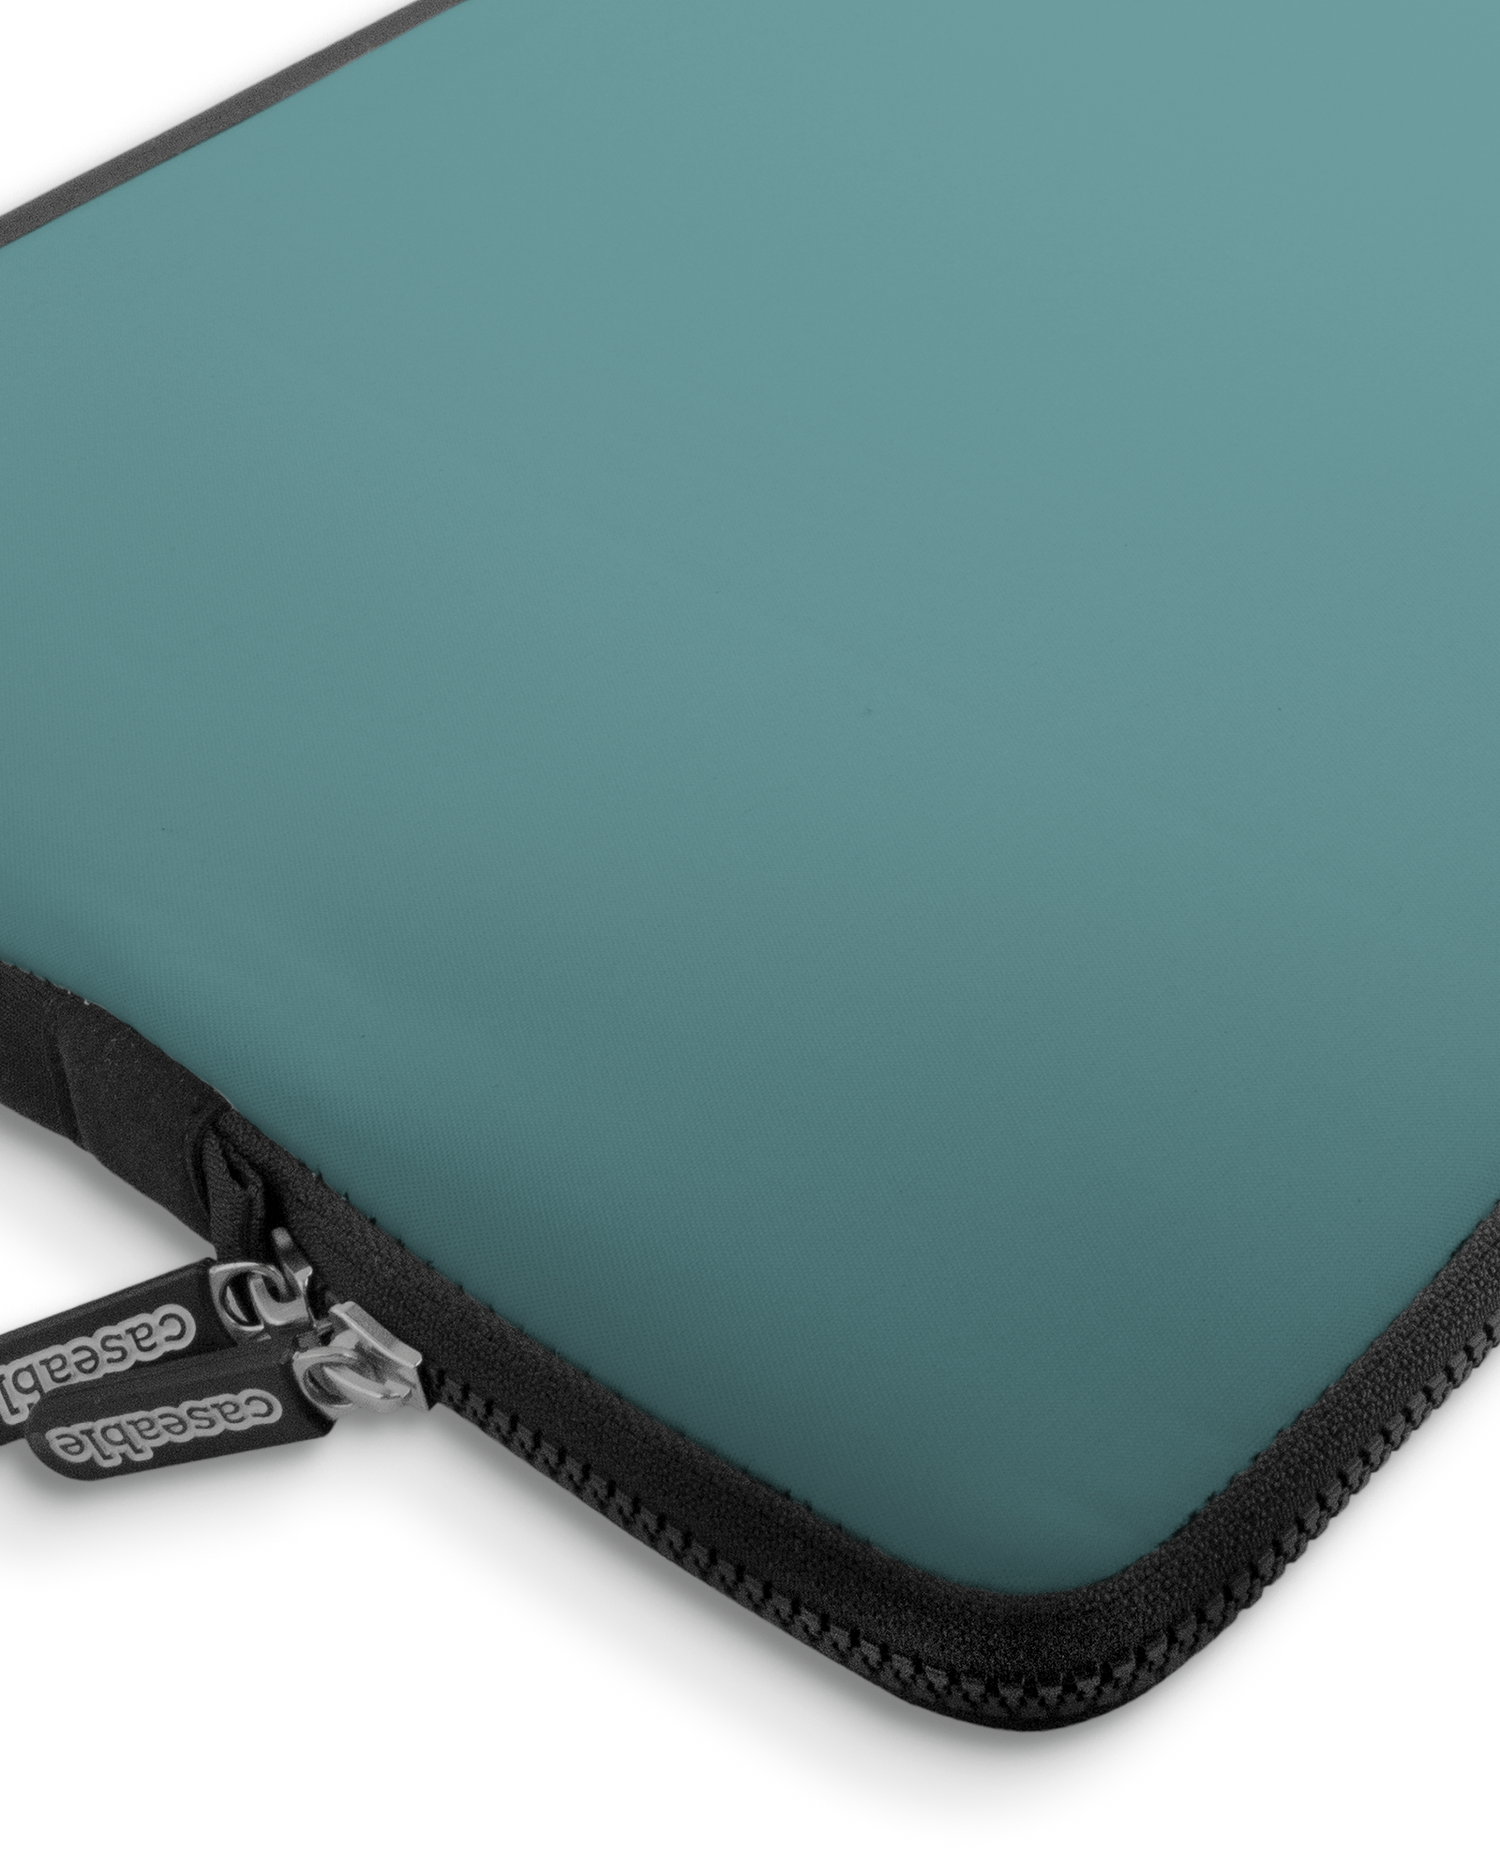 TURQUOISE Premium Laptoptasche 17 Zoll mit Gerät im Inneren